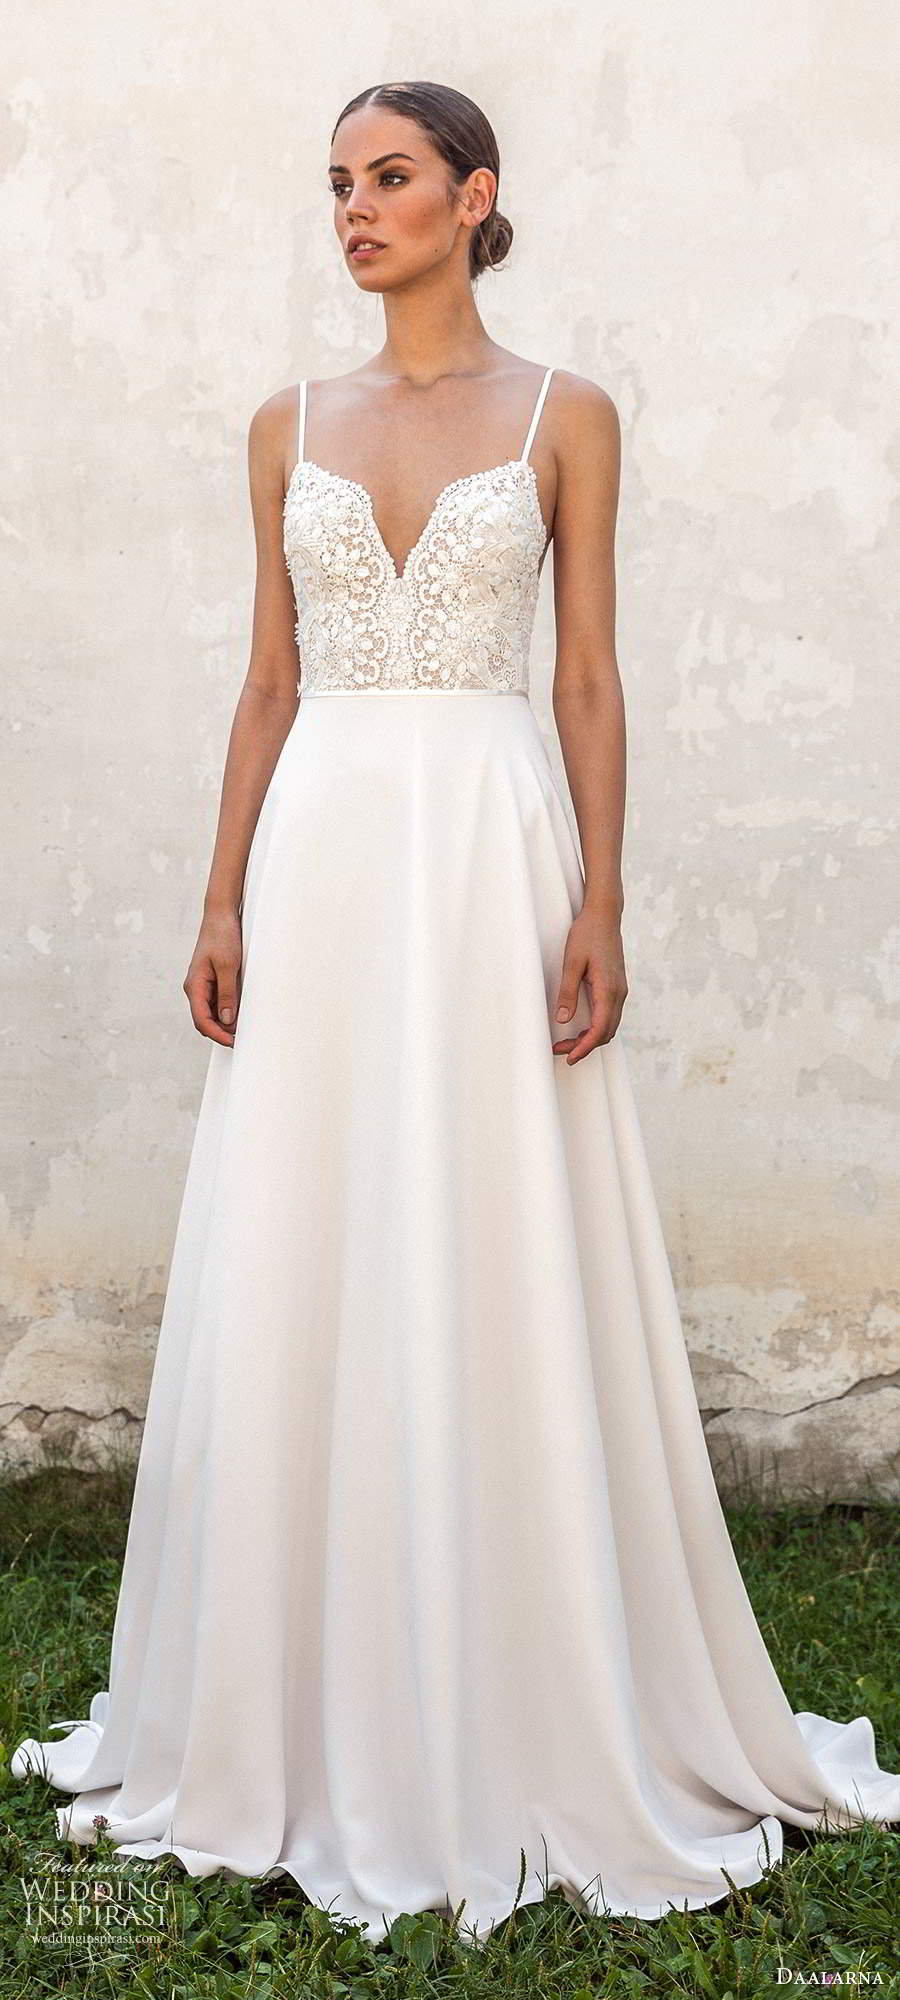 daalarna fall 2020 bridal sleeveless thin straps sweetheart neckline embellished bodice clean skirt a line wedding dress chapel train (12) mv